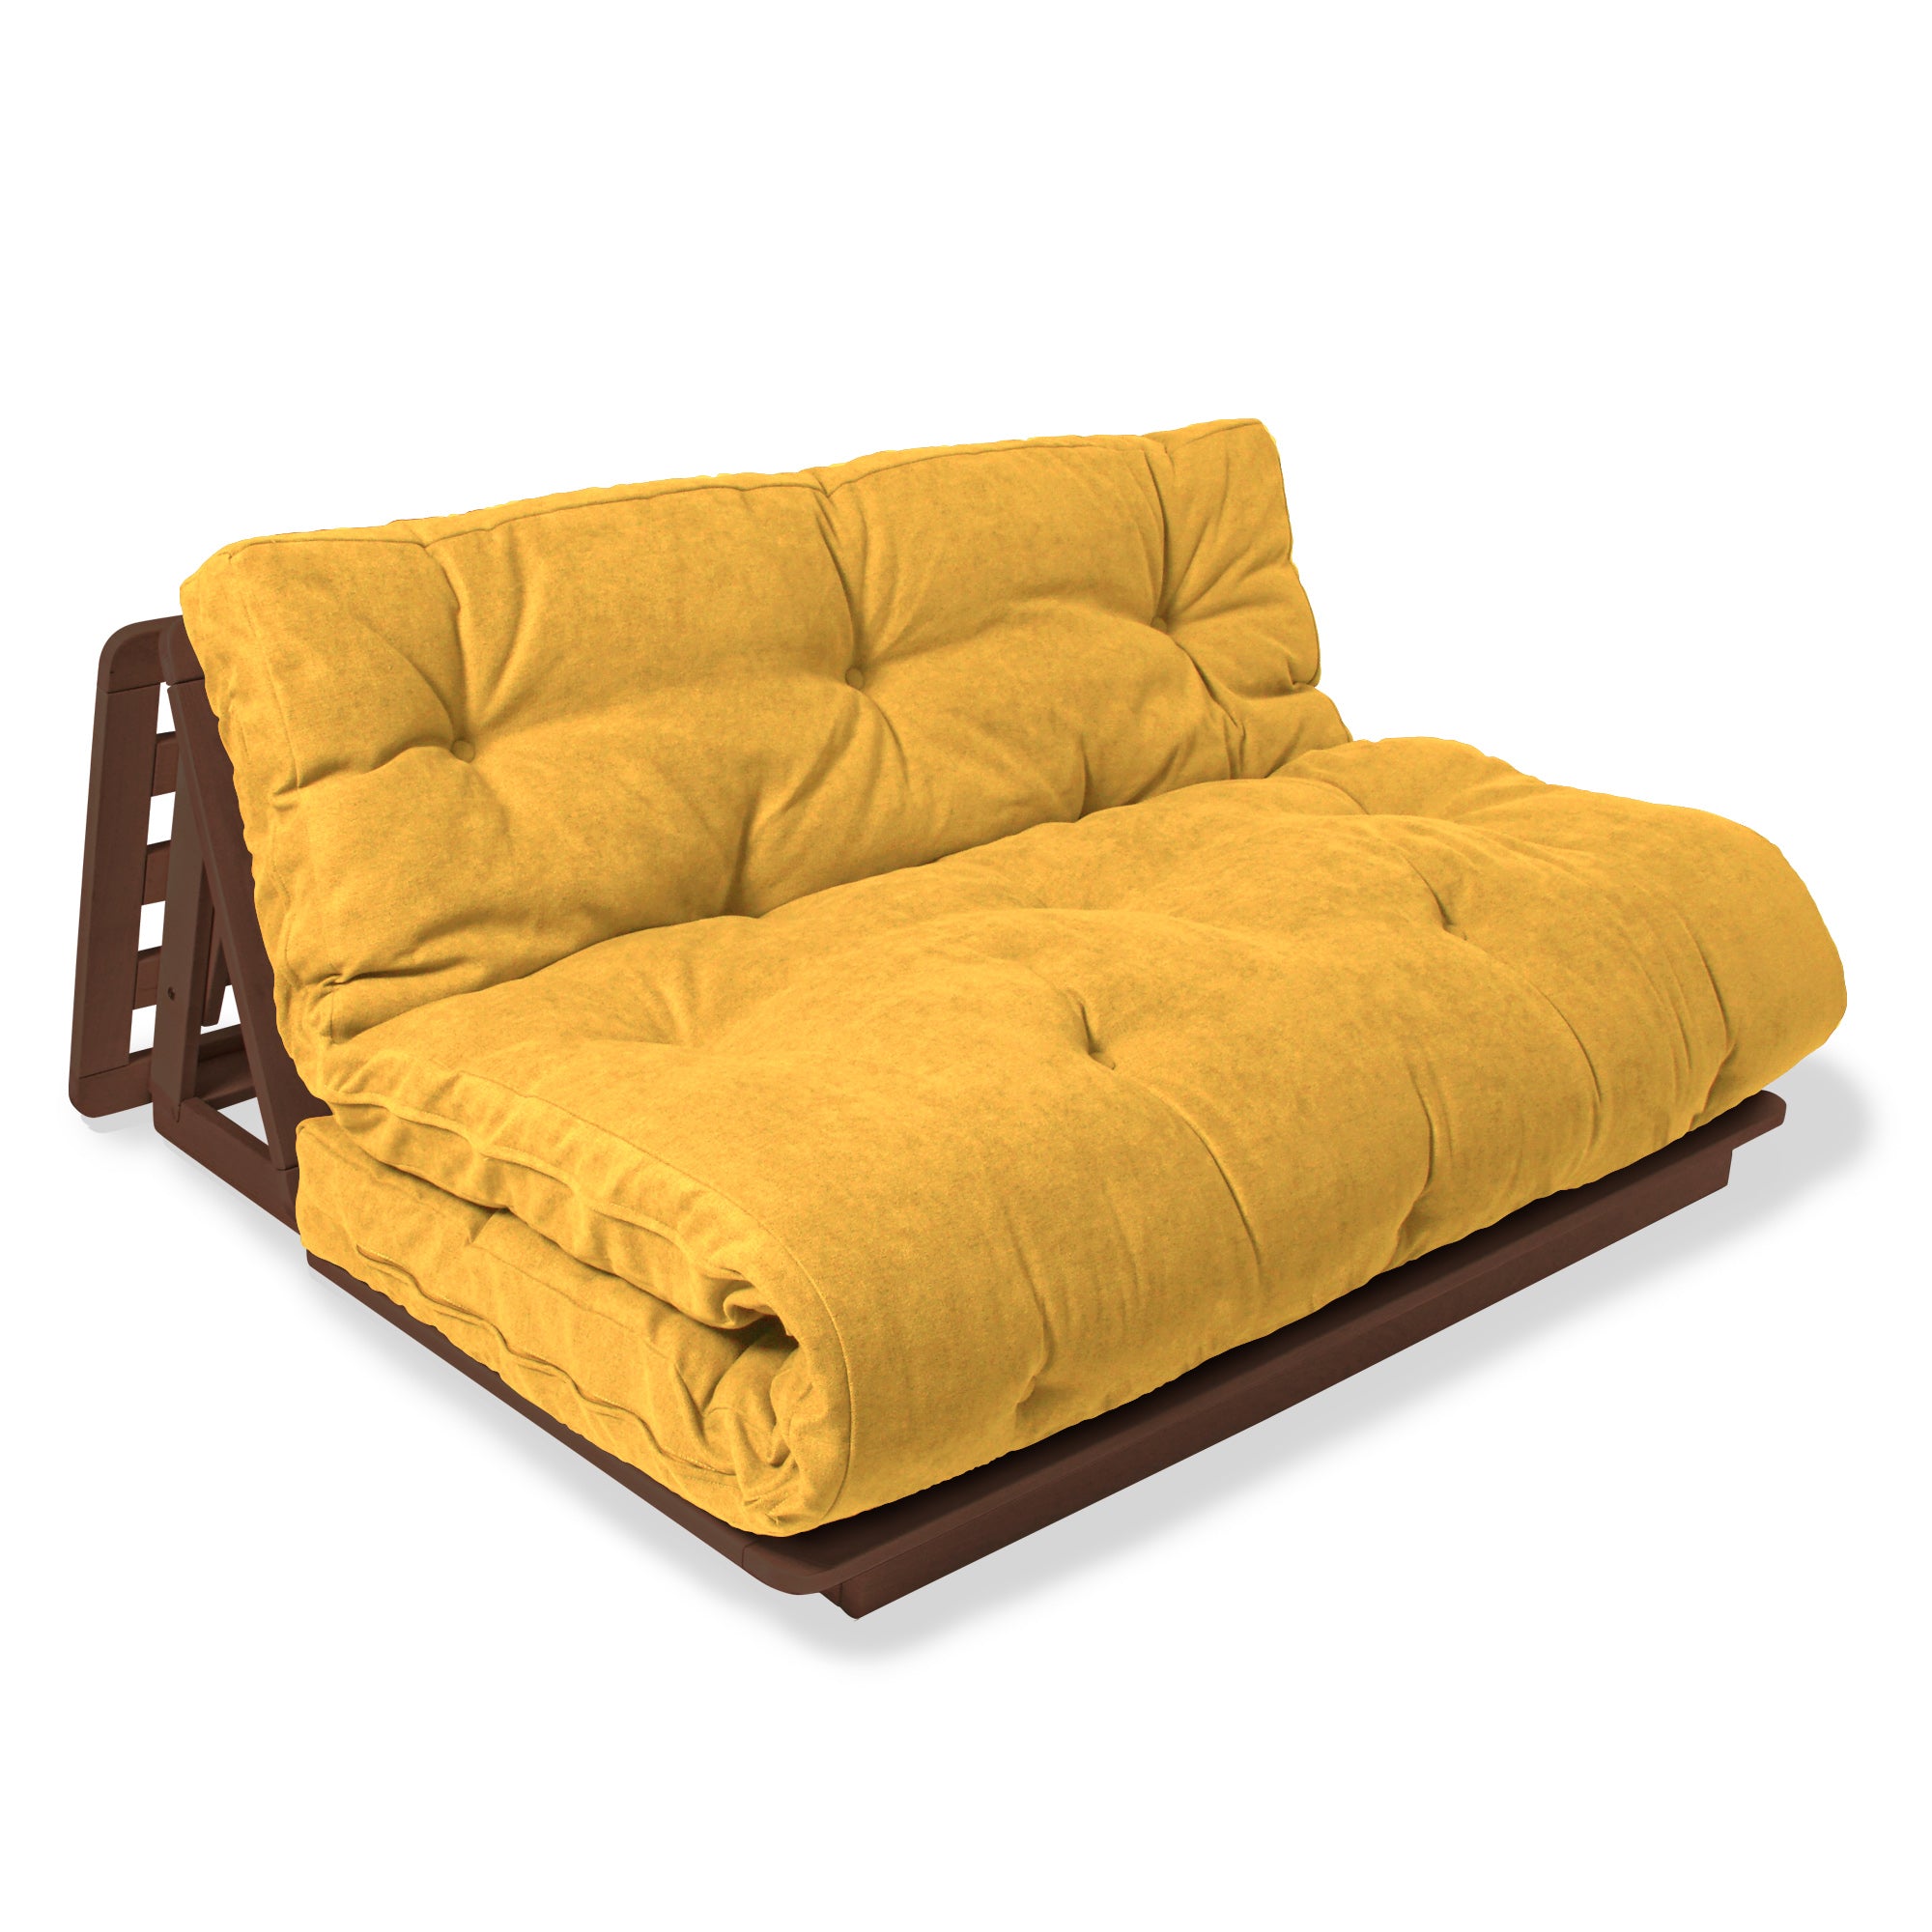 LAYTI-140 Futon Chair-walnut frame-yellow fabric